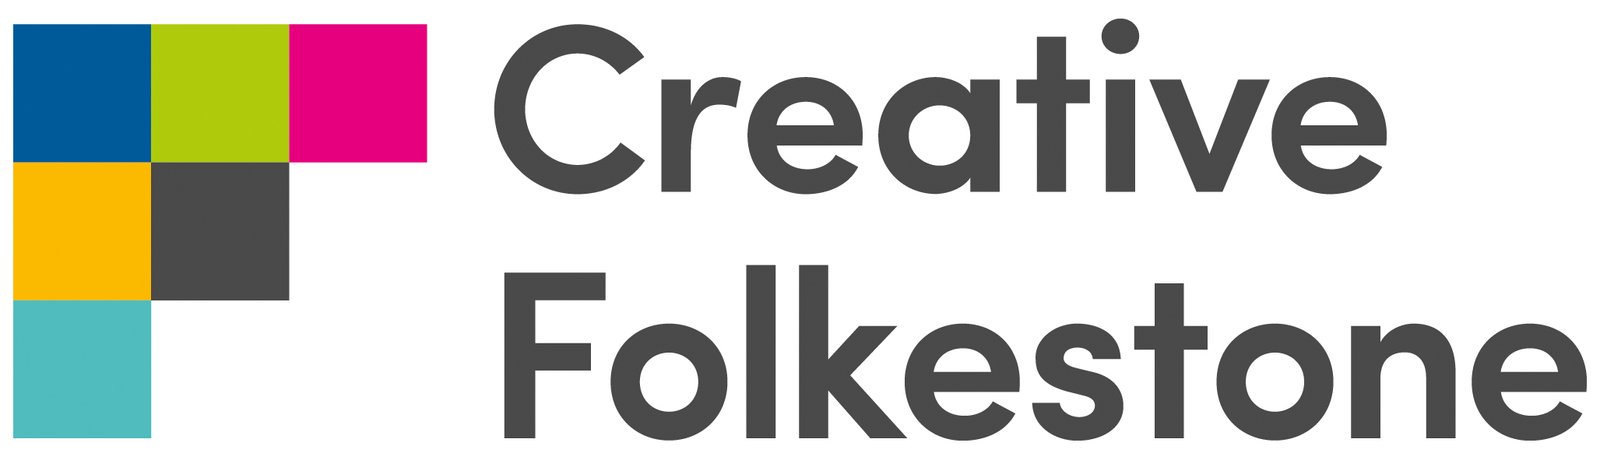 Creative Folkestone logo